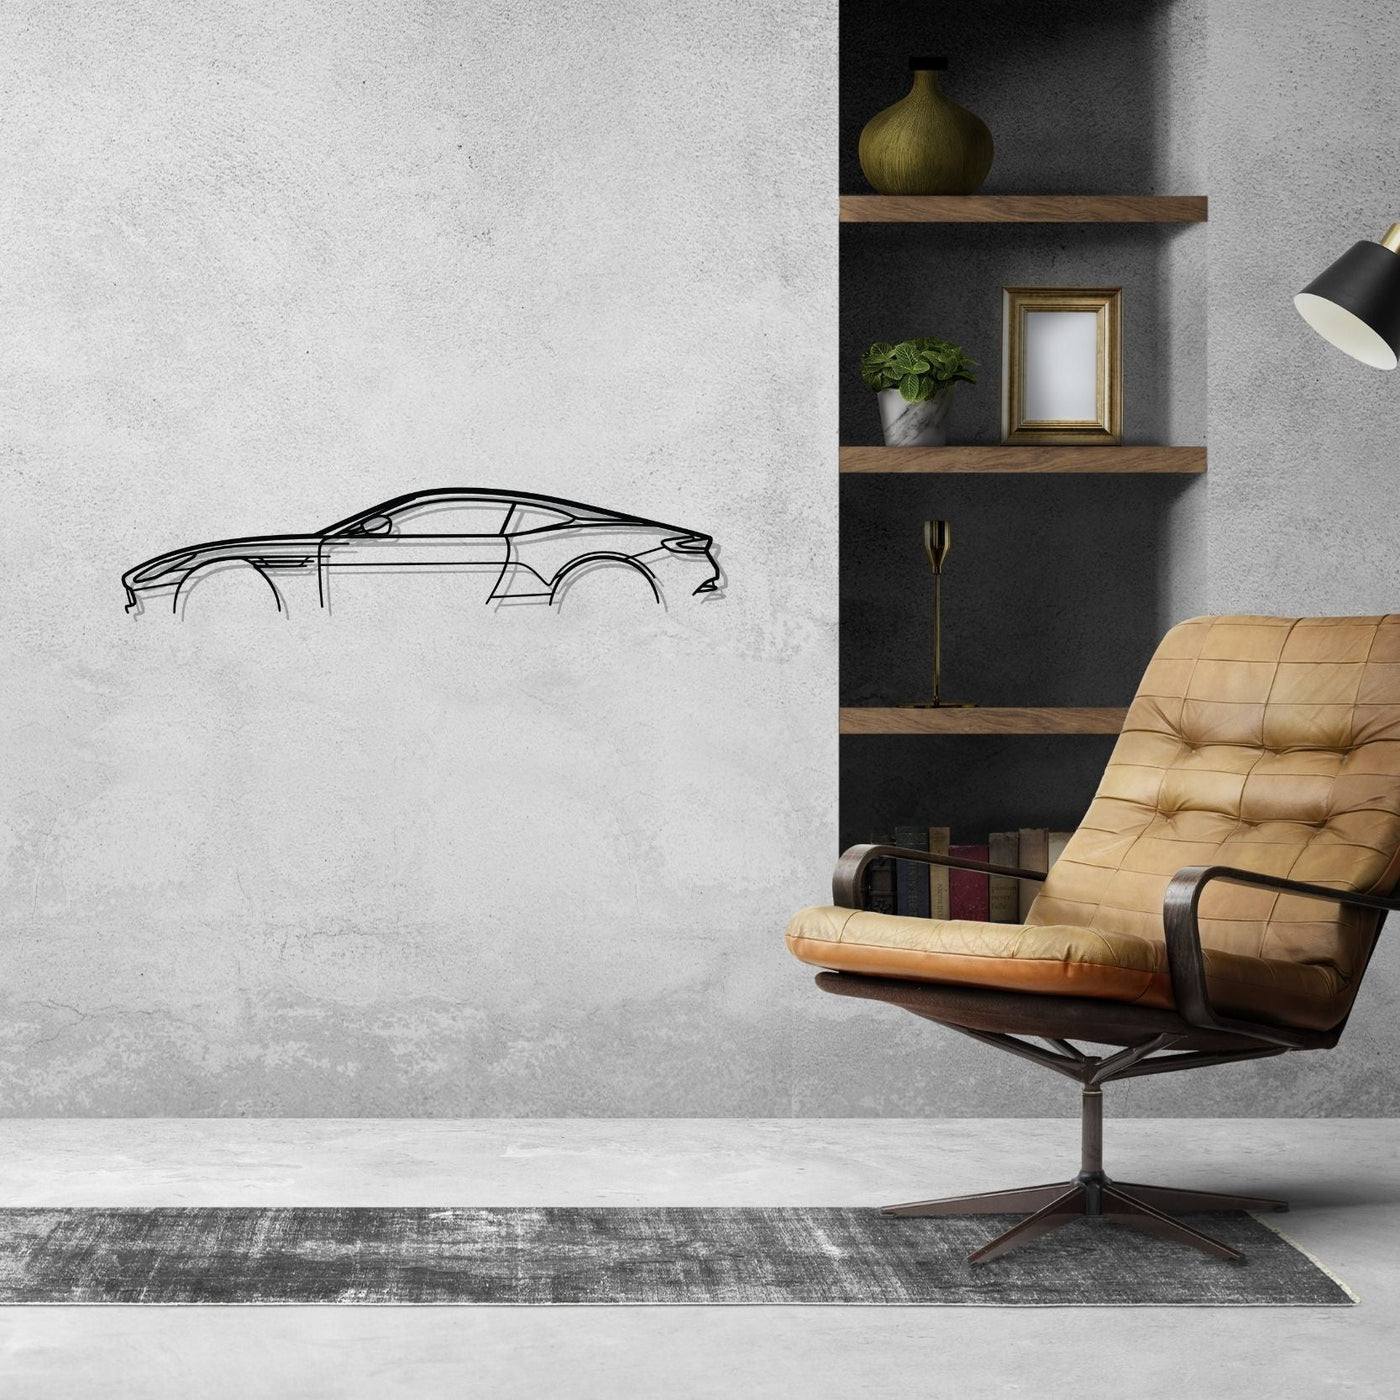 Aston DB11 Classic Silhouette Metal Wall Art